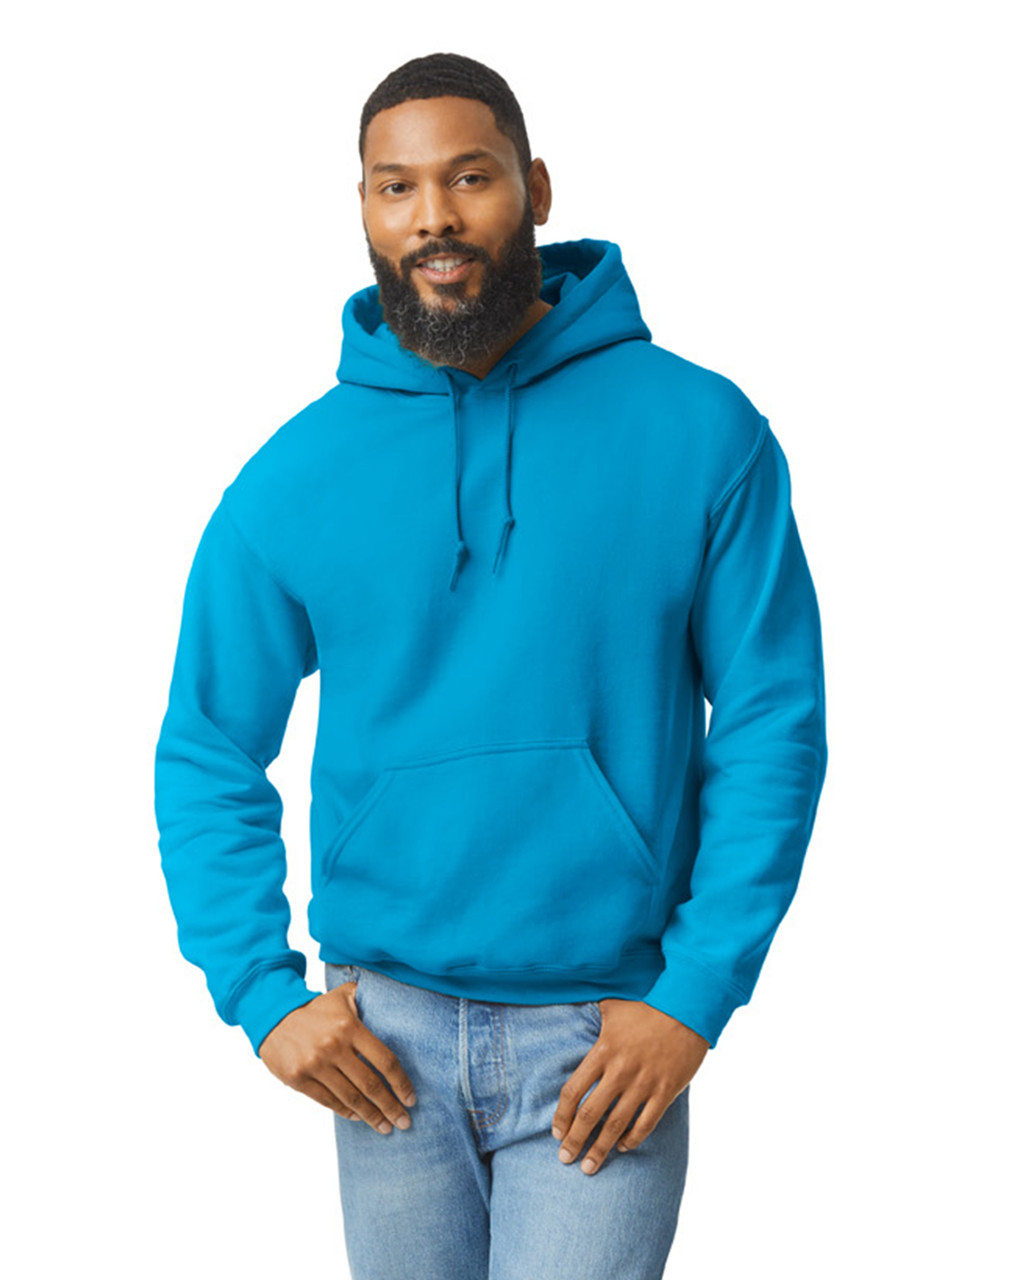 Heavy Blend Adult Hooded Sweatshirt 18500